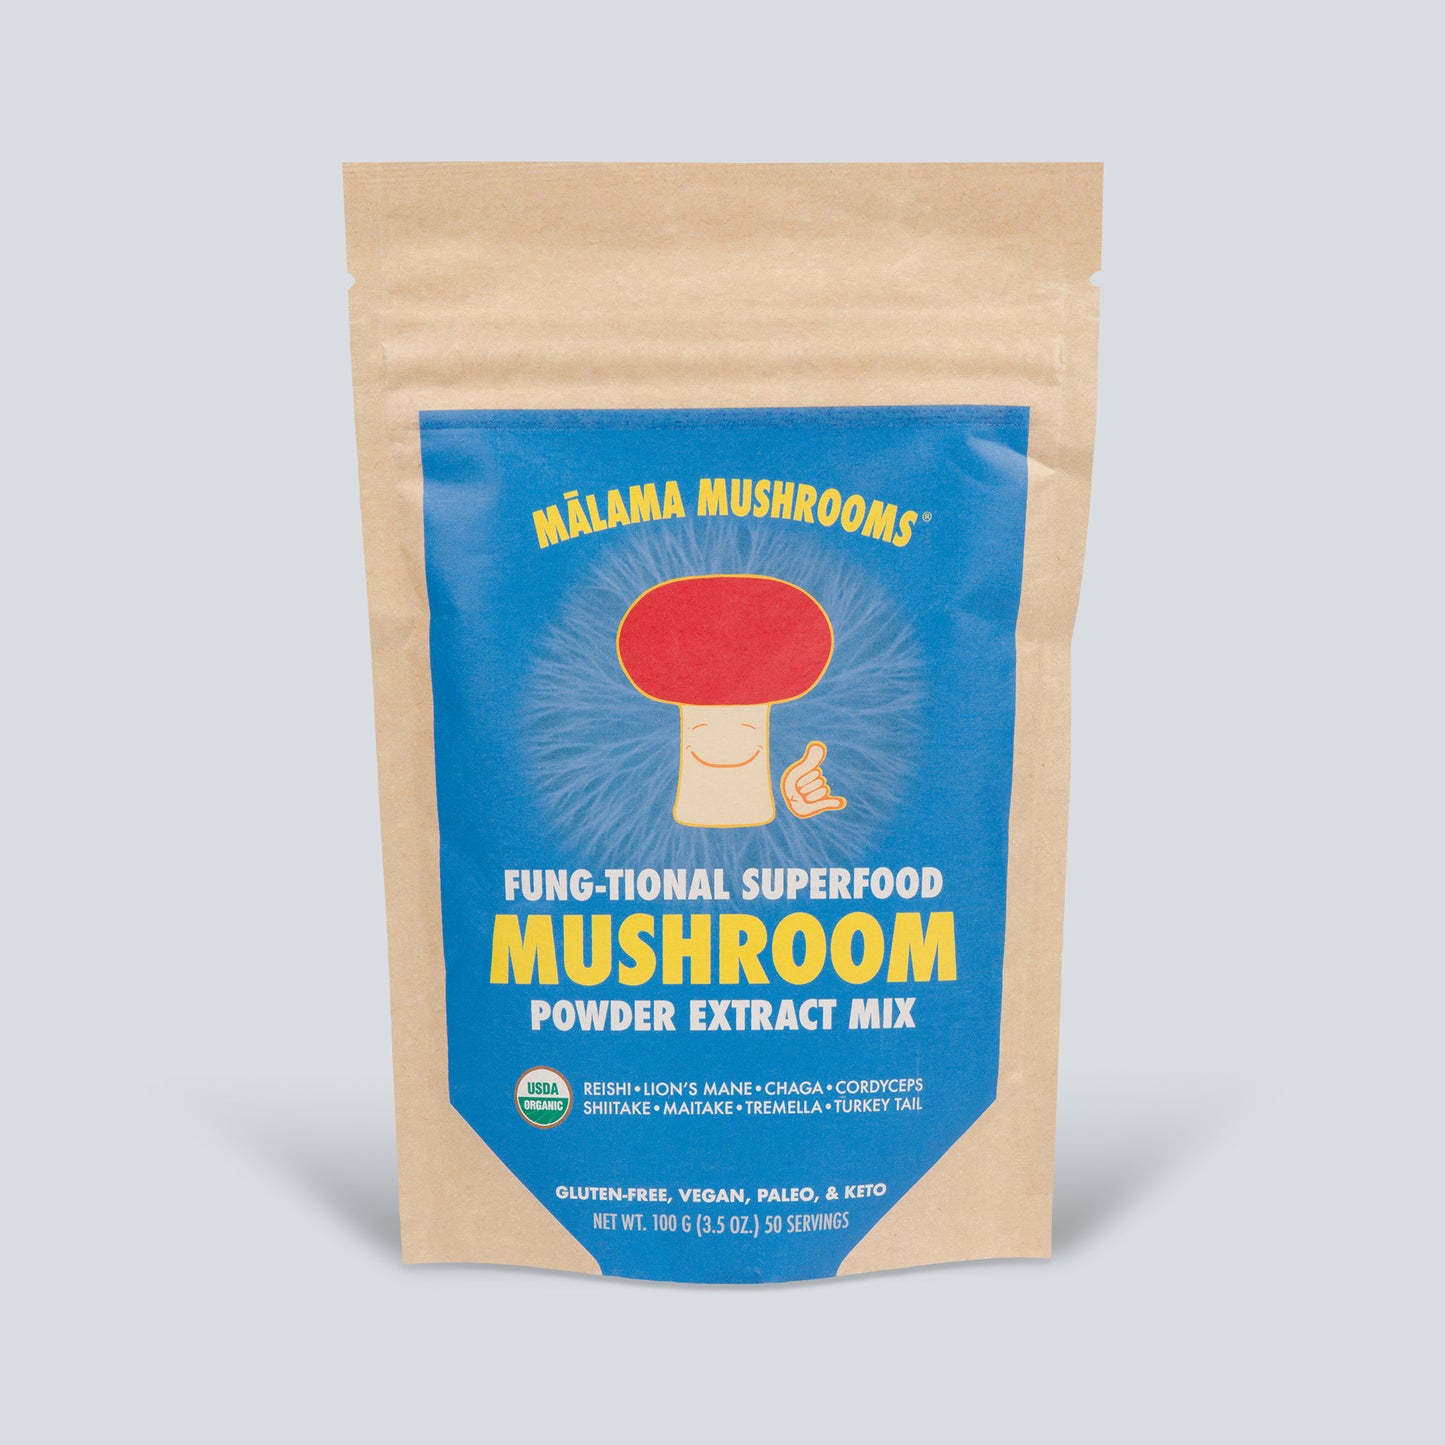 8 Mushroom Superfood Powder Mix